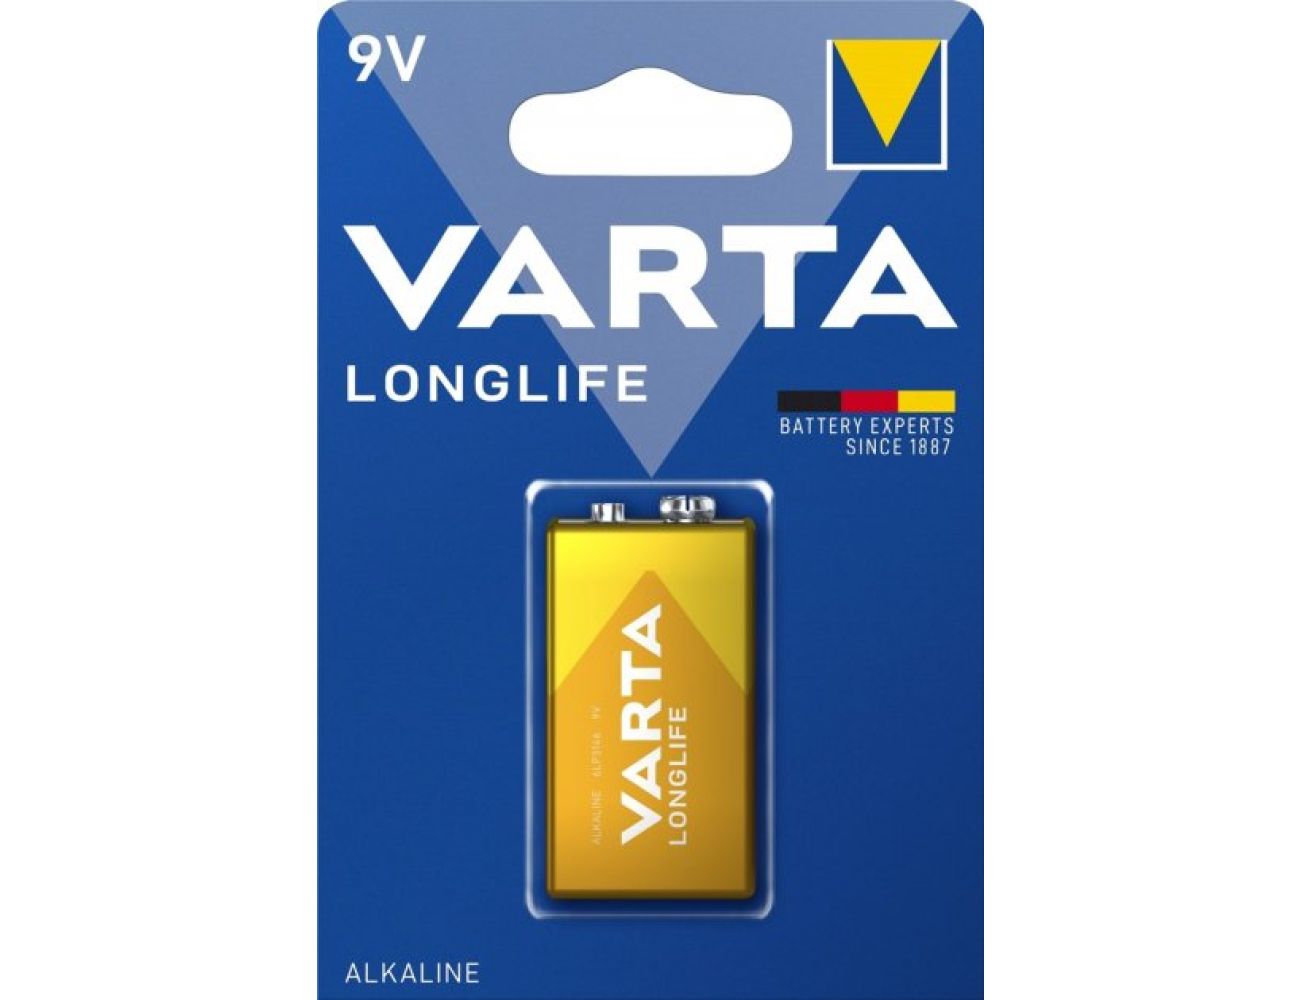 Батарейка Крона 9V 6LR61 Varta Longlife Extra 6F22 / Alkaline 04122101411 1 шт